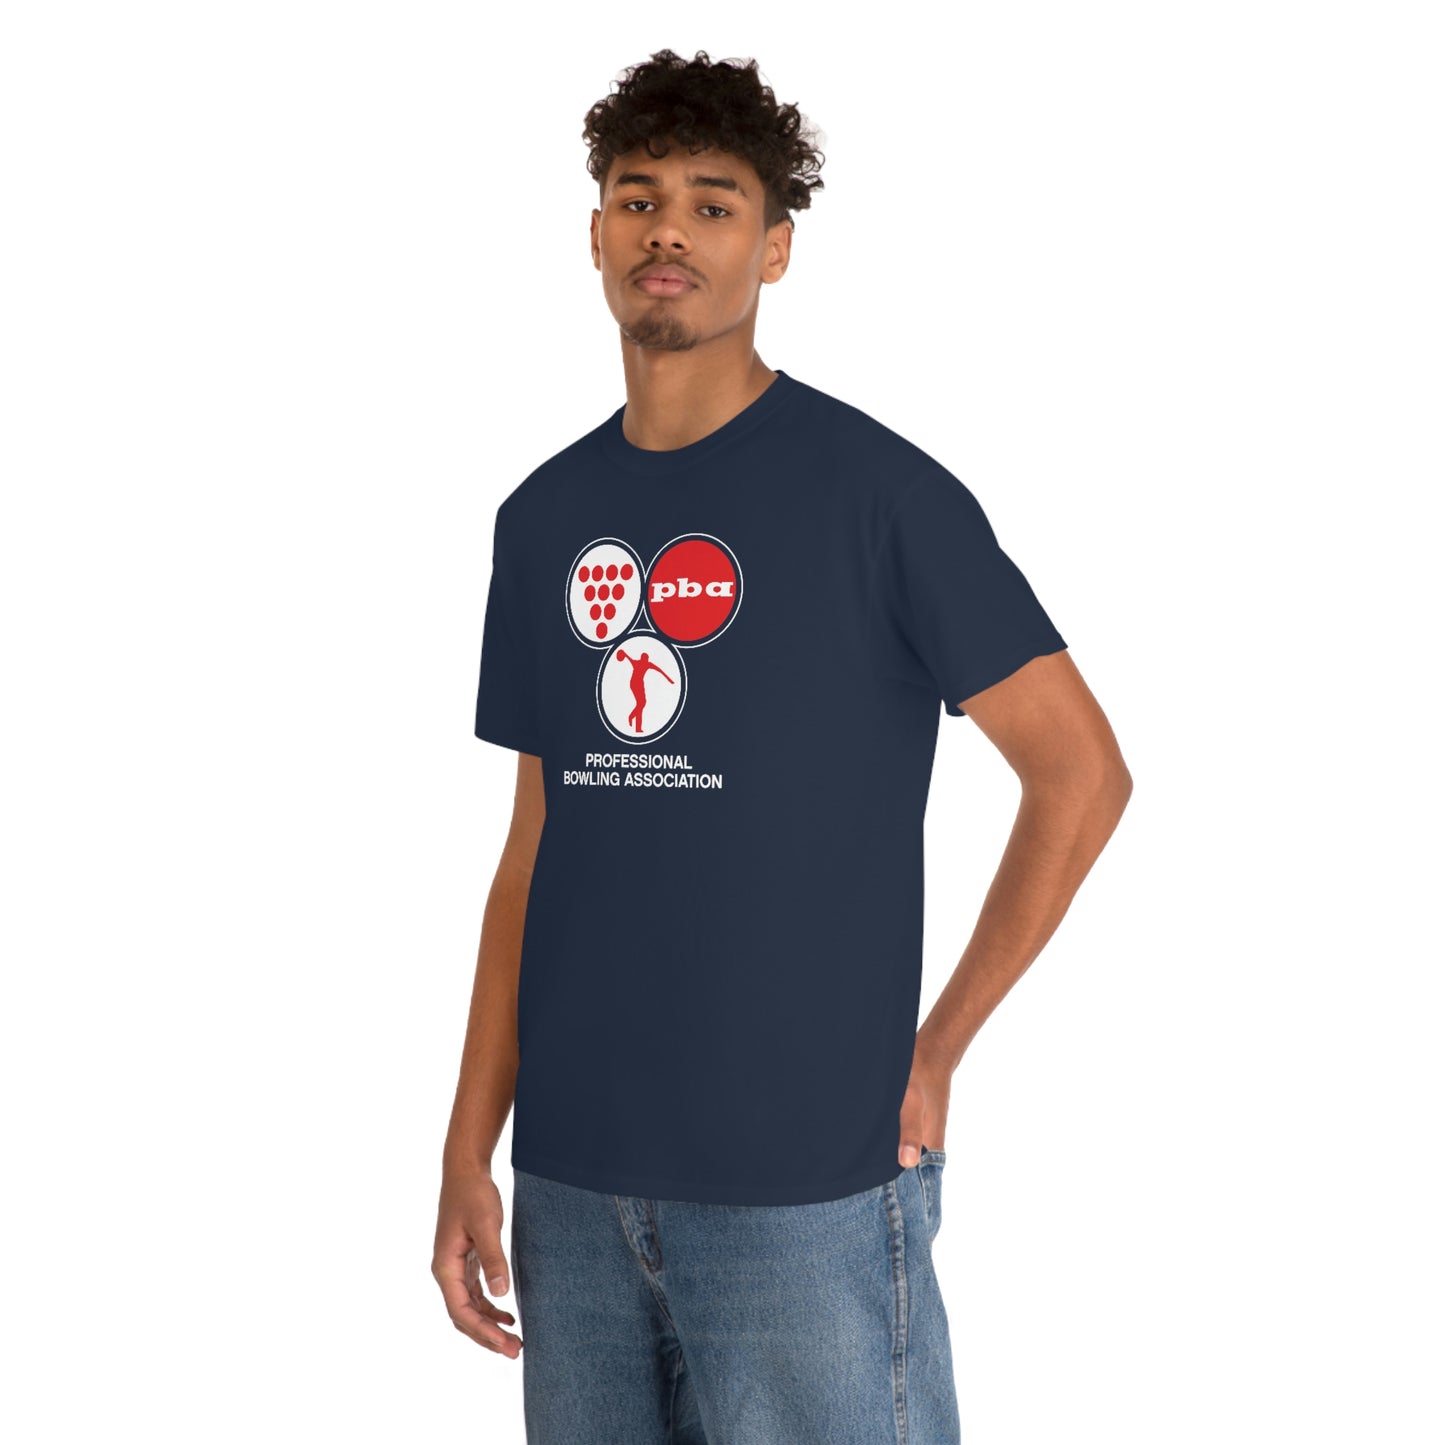 Professional Bowlers Association T-Shirt